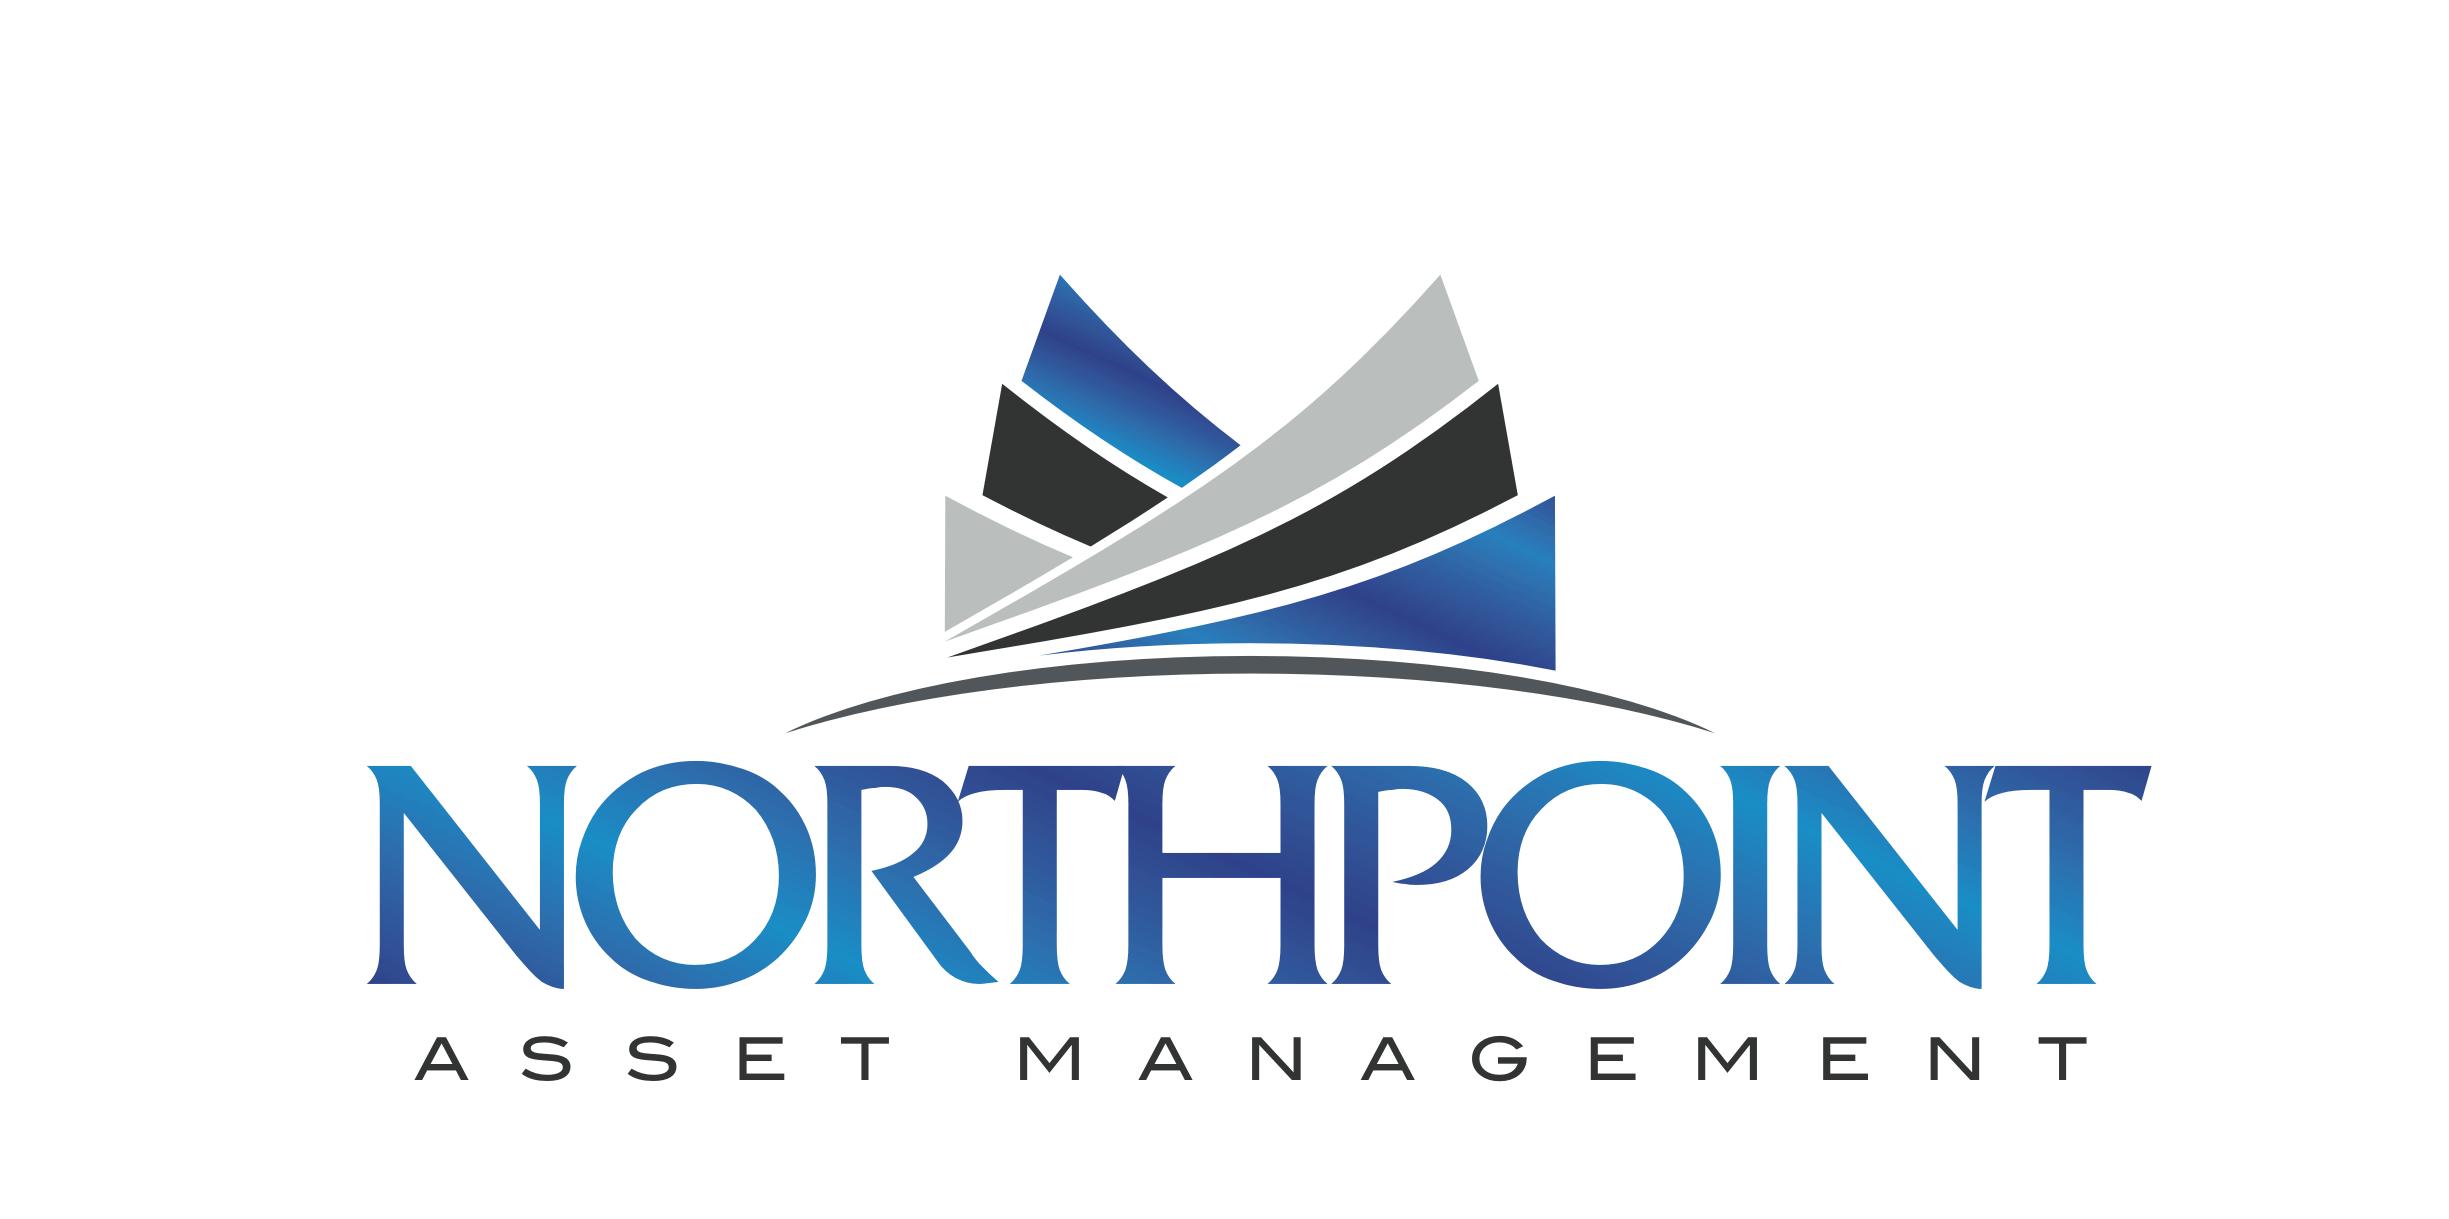 Northpoint Asset Management - Philadelphia logo